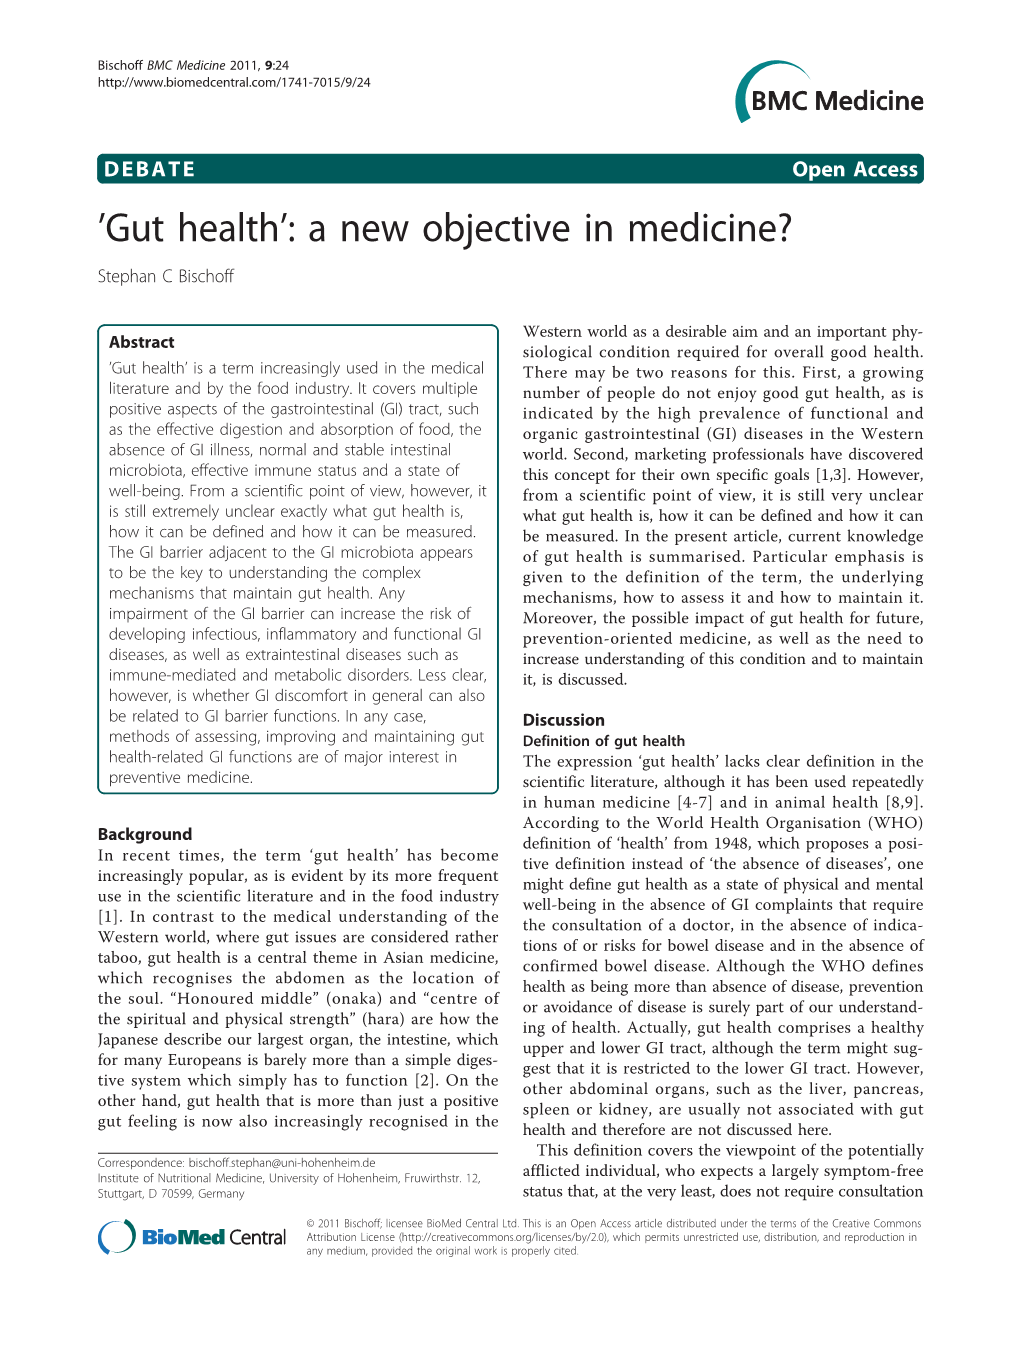 Lgut Healthl: a New Objective in Medicine?